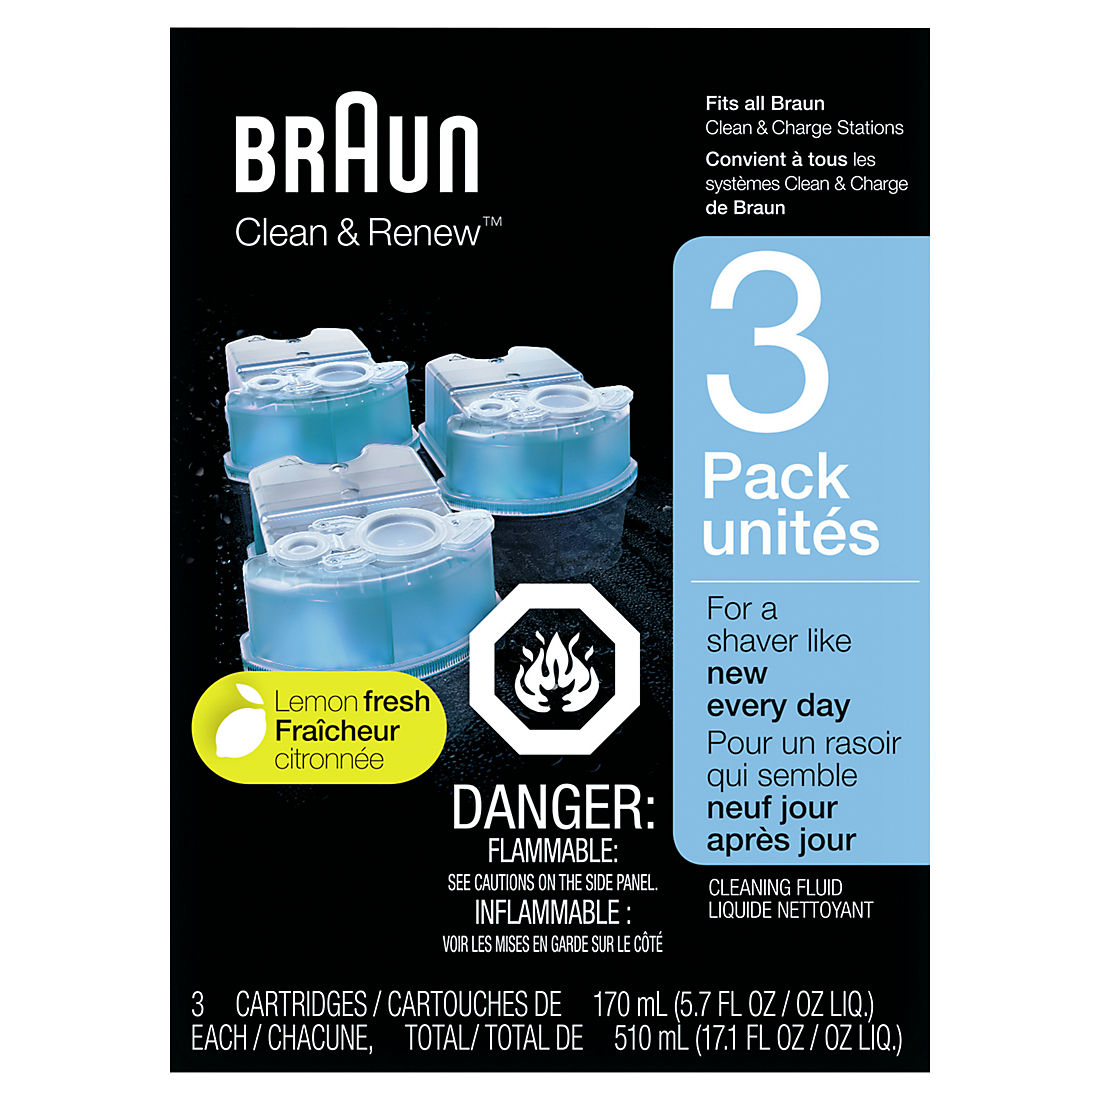 Braun Clean & Renew Cartridges, 3 pk.